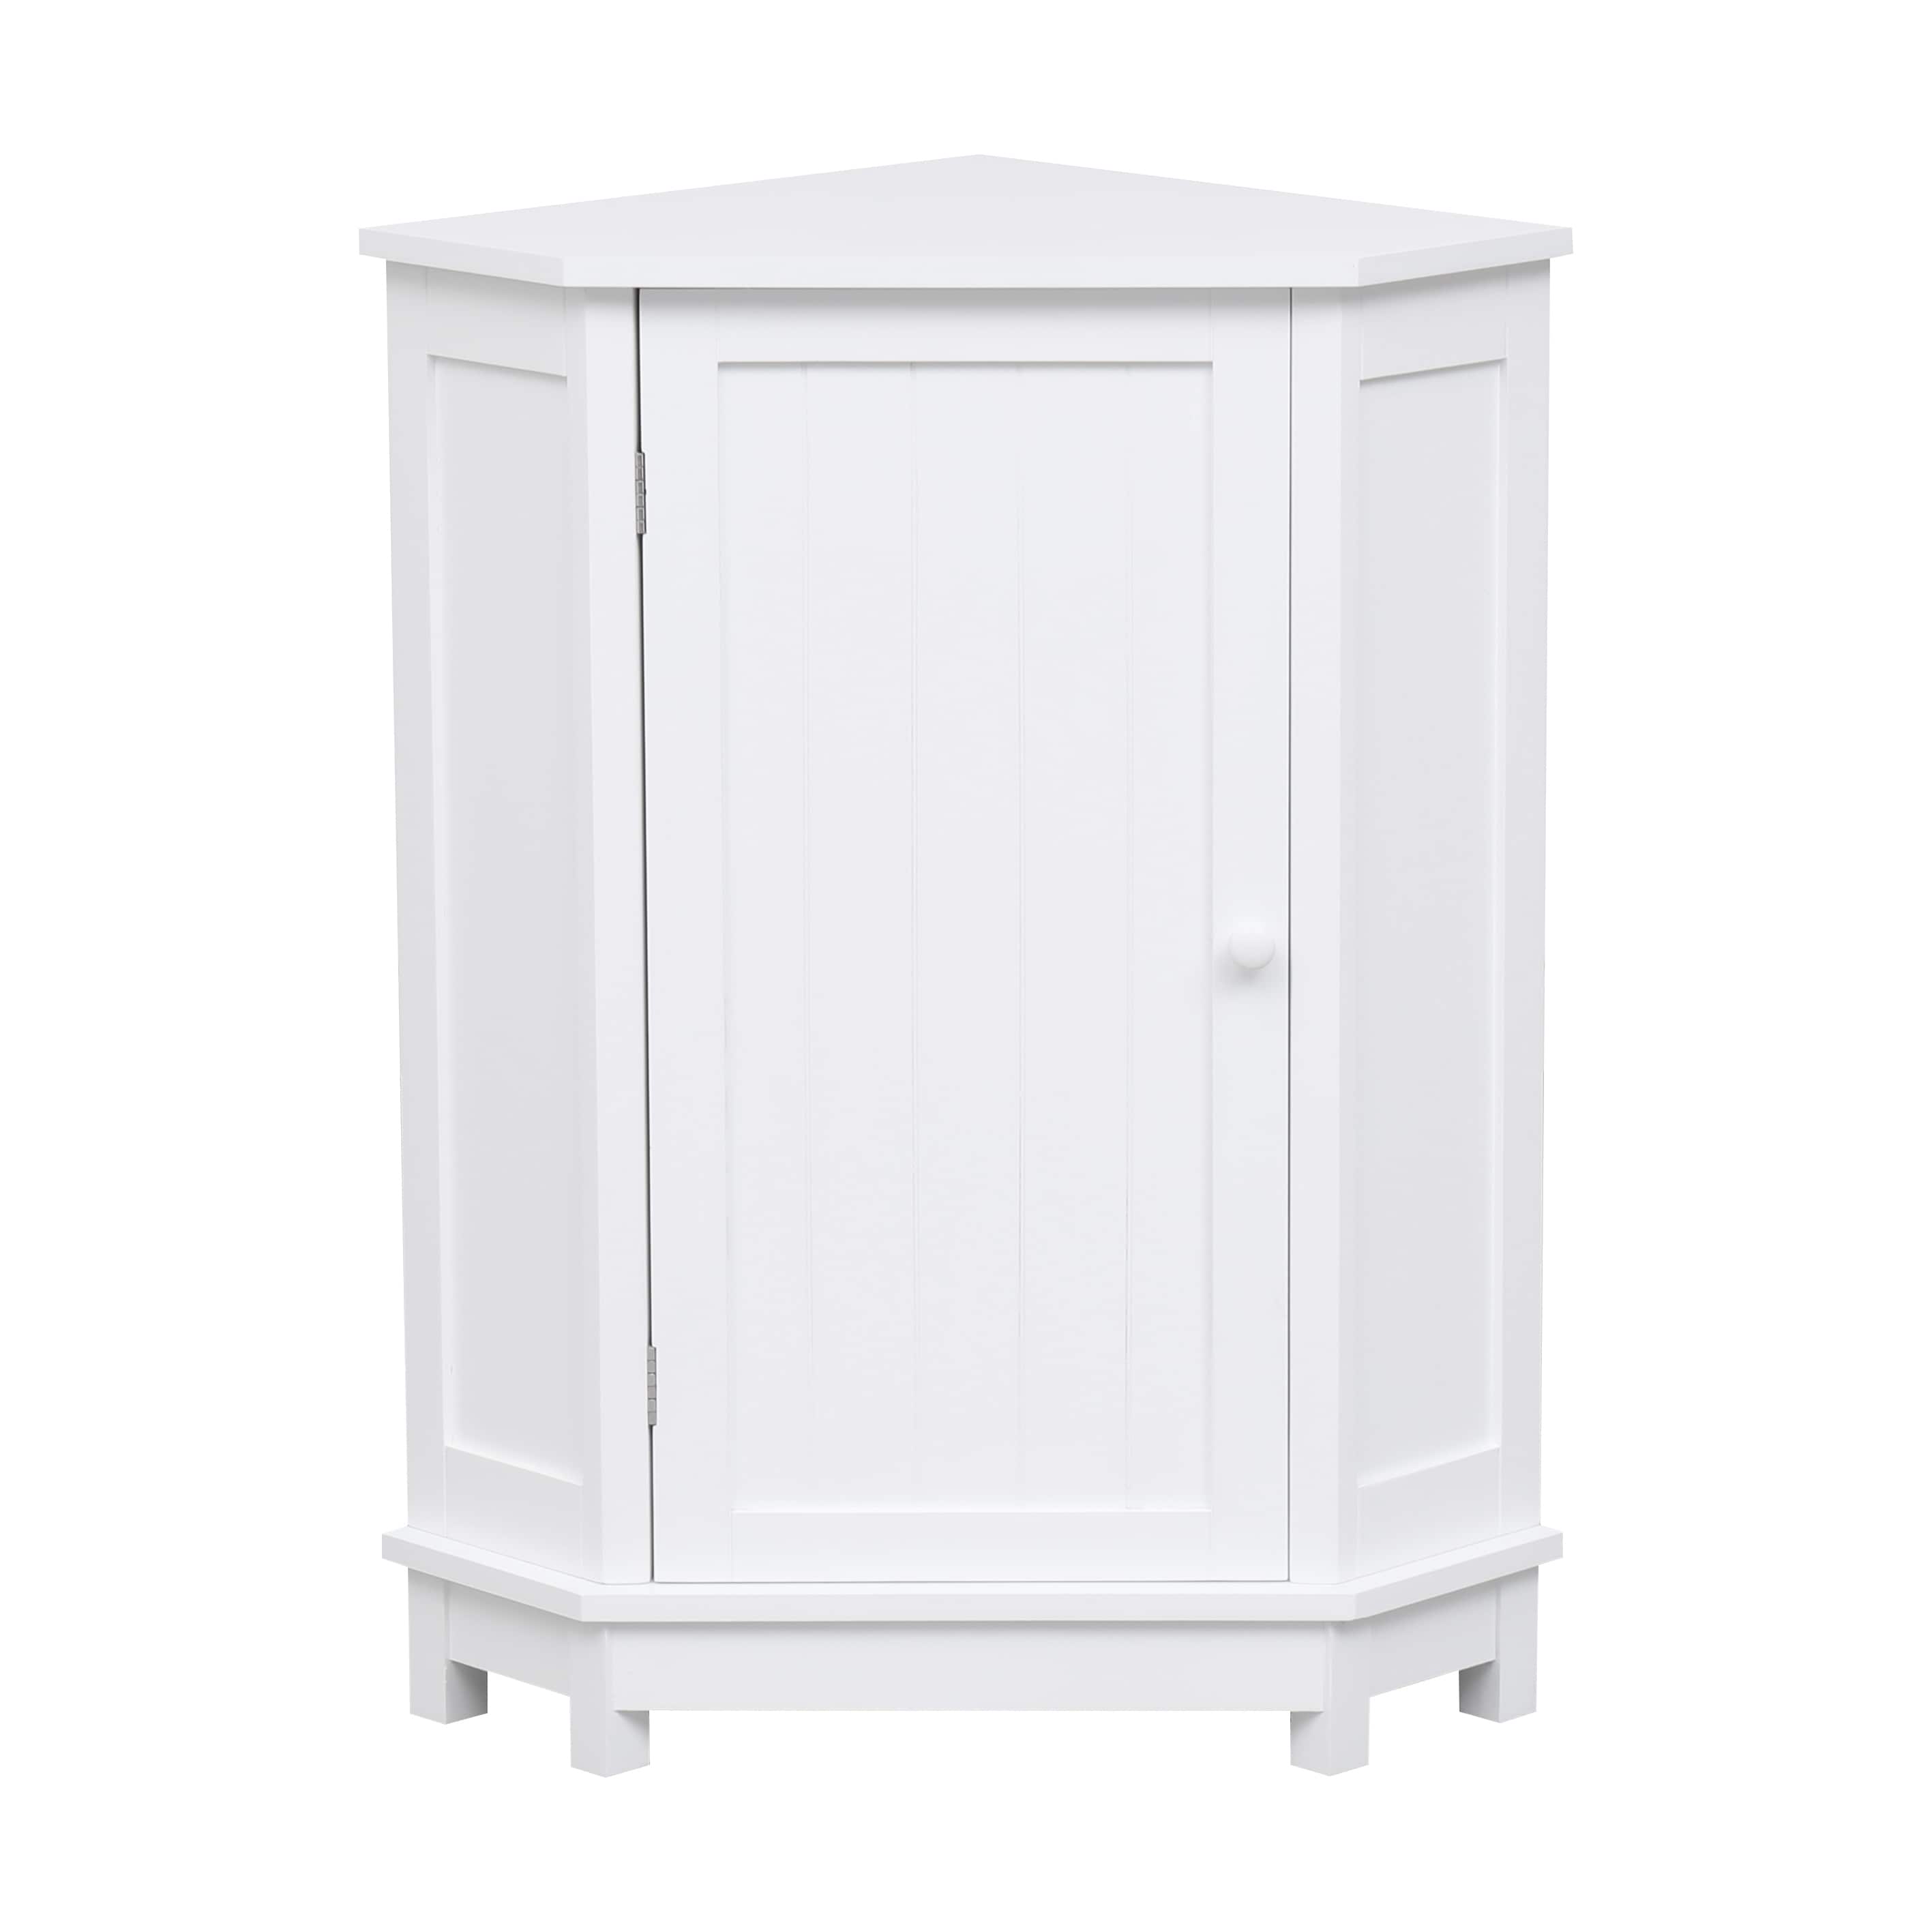 https://ak1.ostkcdn.com/images/products/is/images/direct/427d352602666cc8d7fe2ea359e60f29d8d0ffea/Triangle-Corner-Bathroom-Storage-Cabinet-with-Shelf.jpg